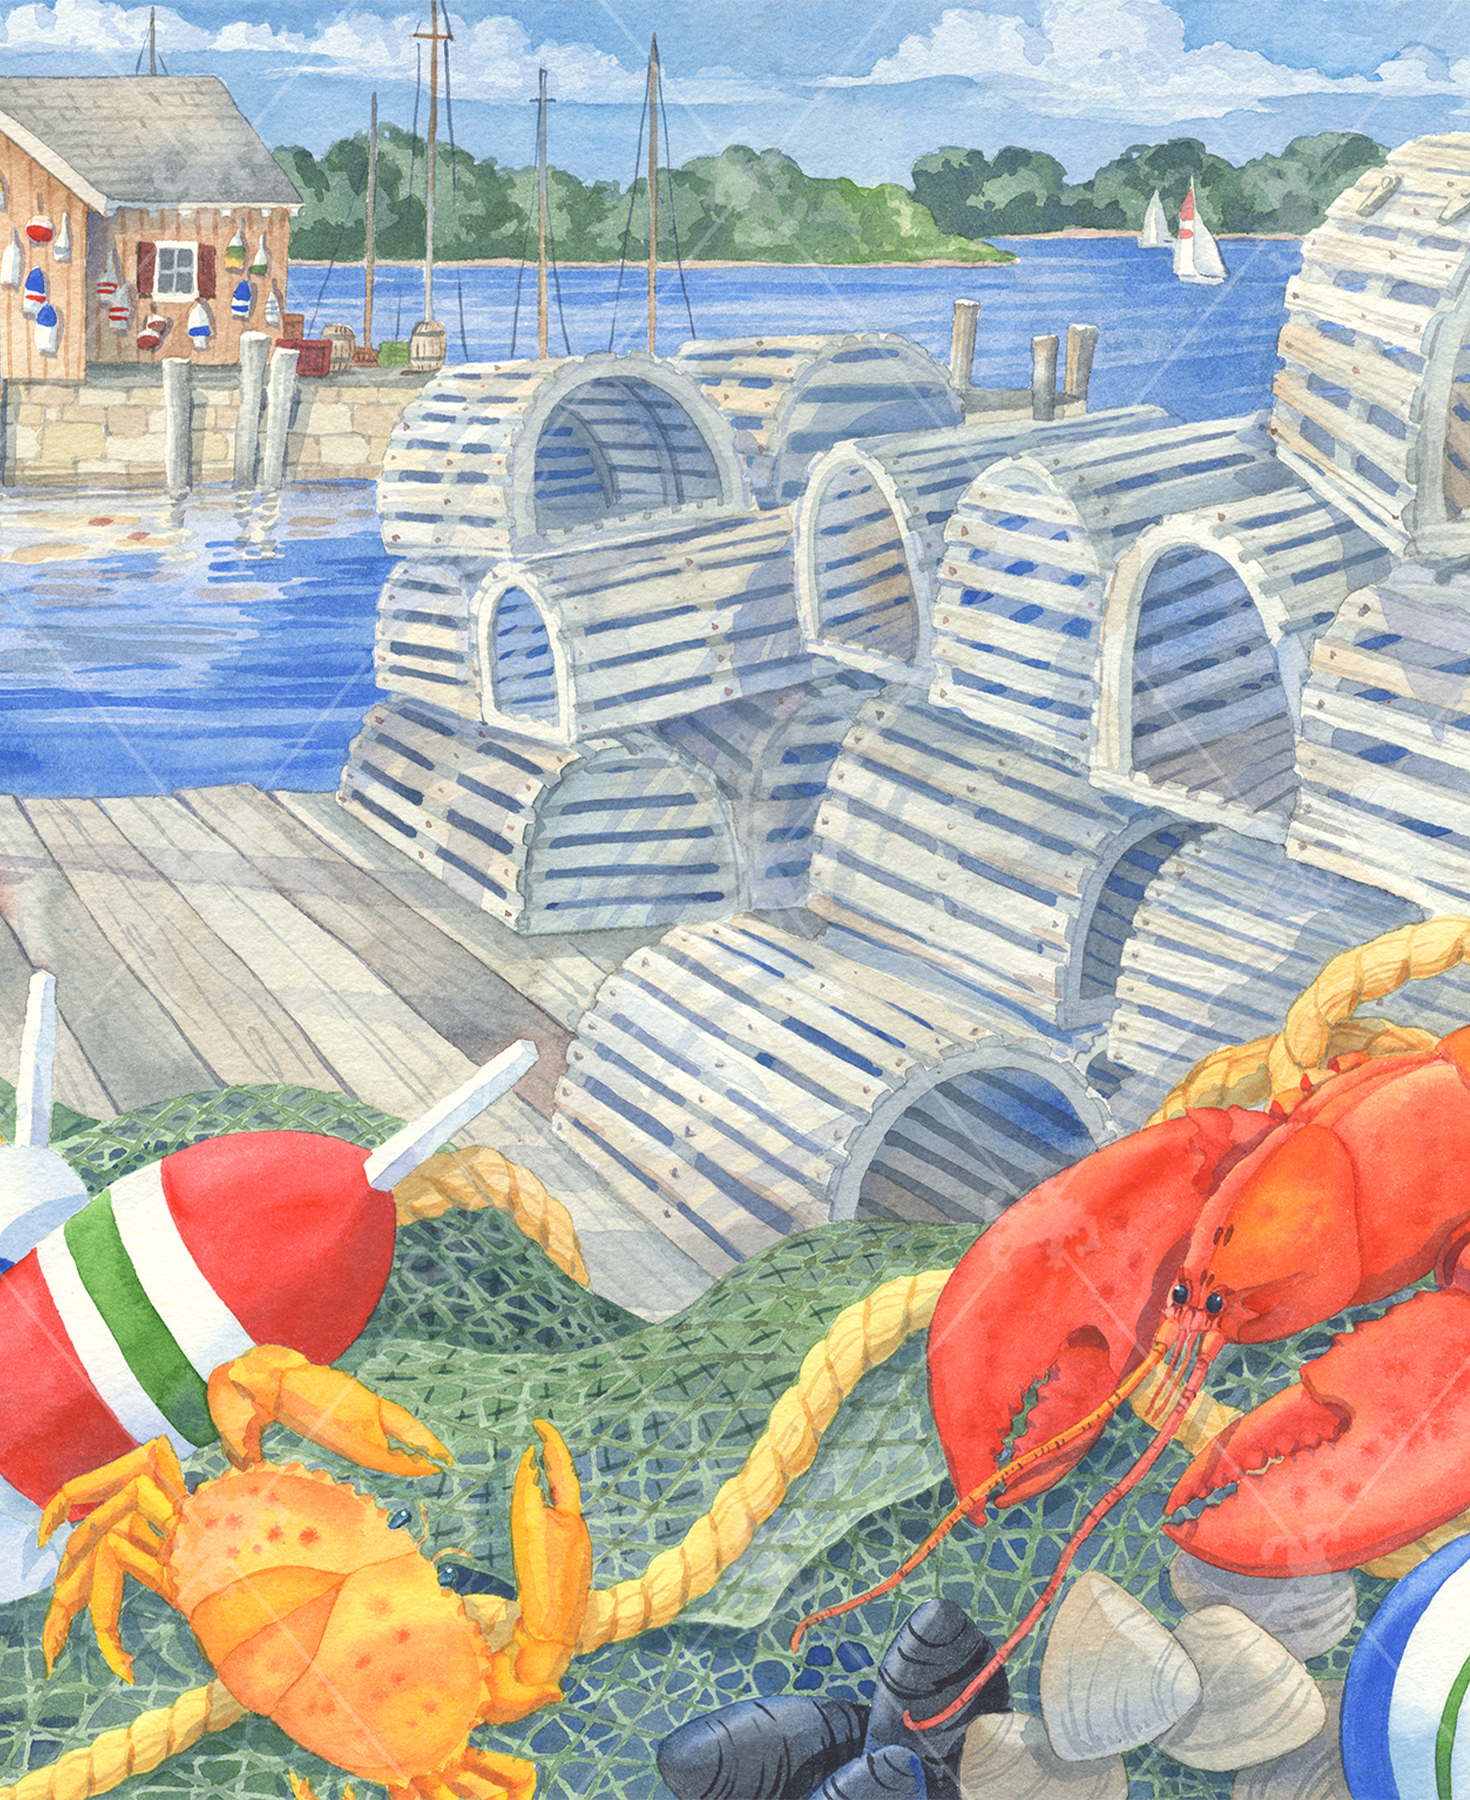 Lobster Dock